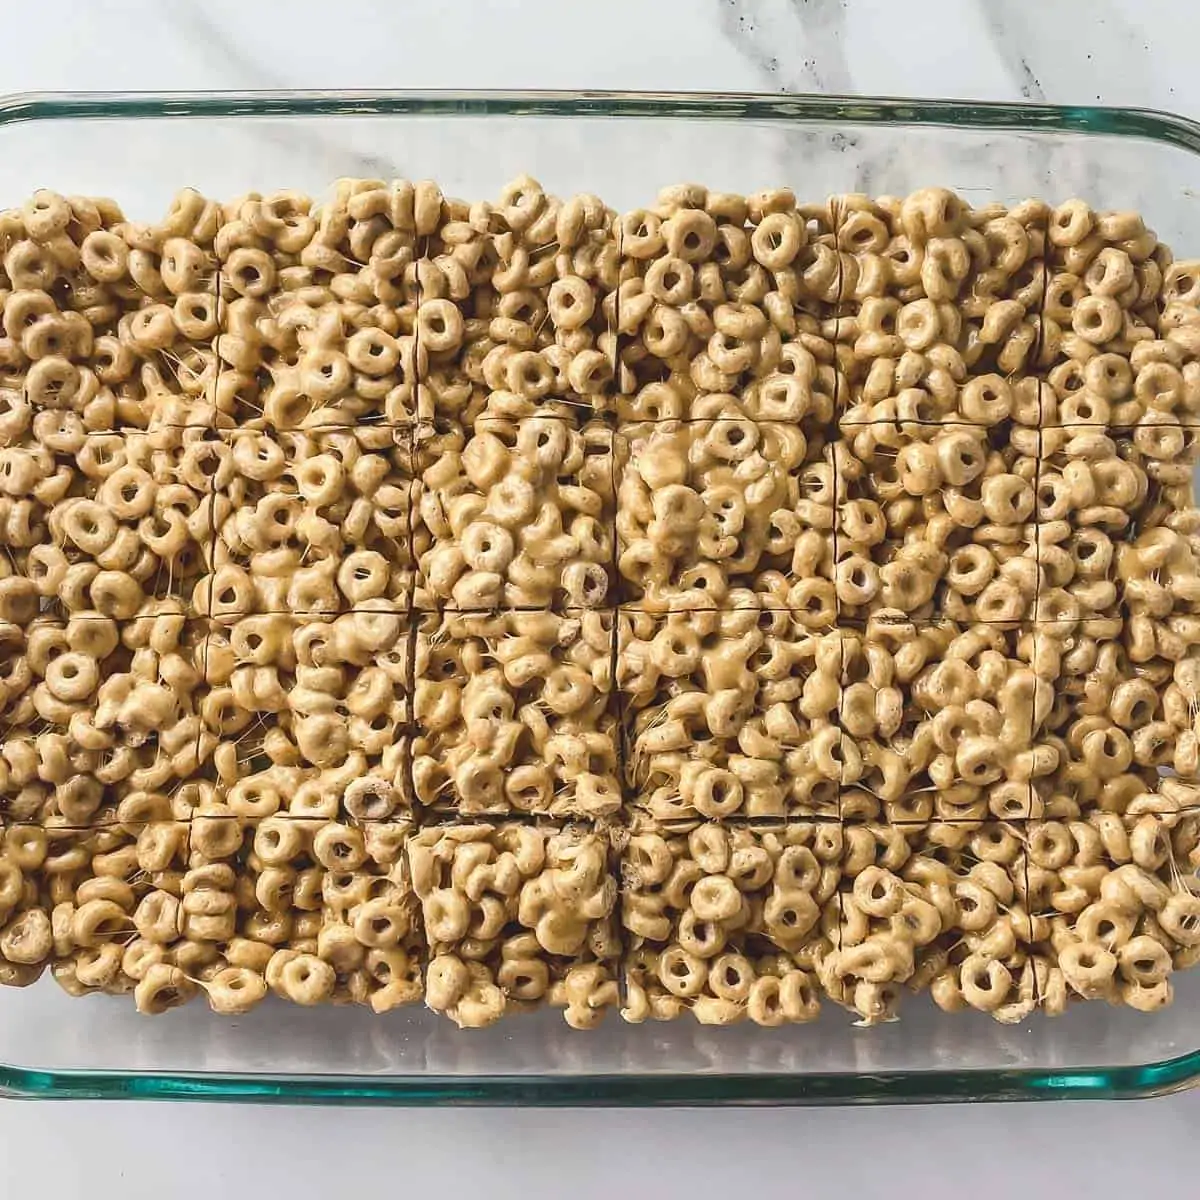 cheerio bars cut into a grid in a glass pan